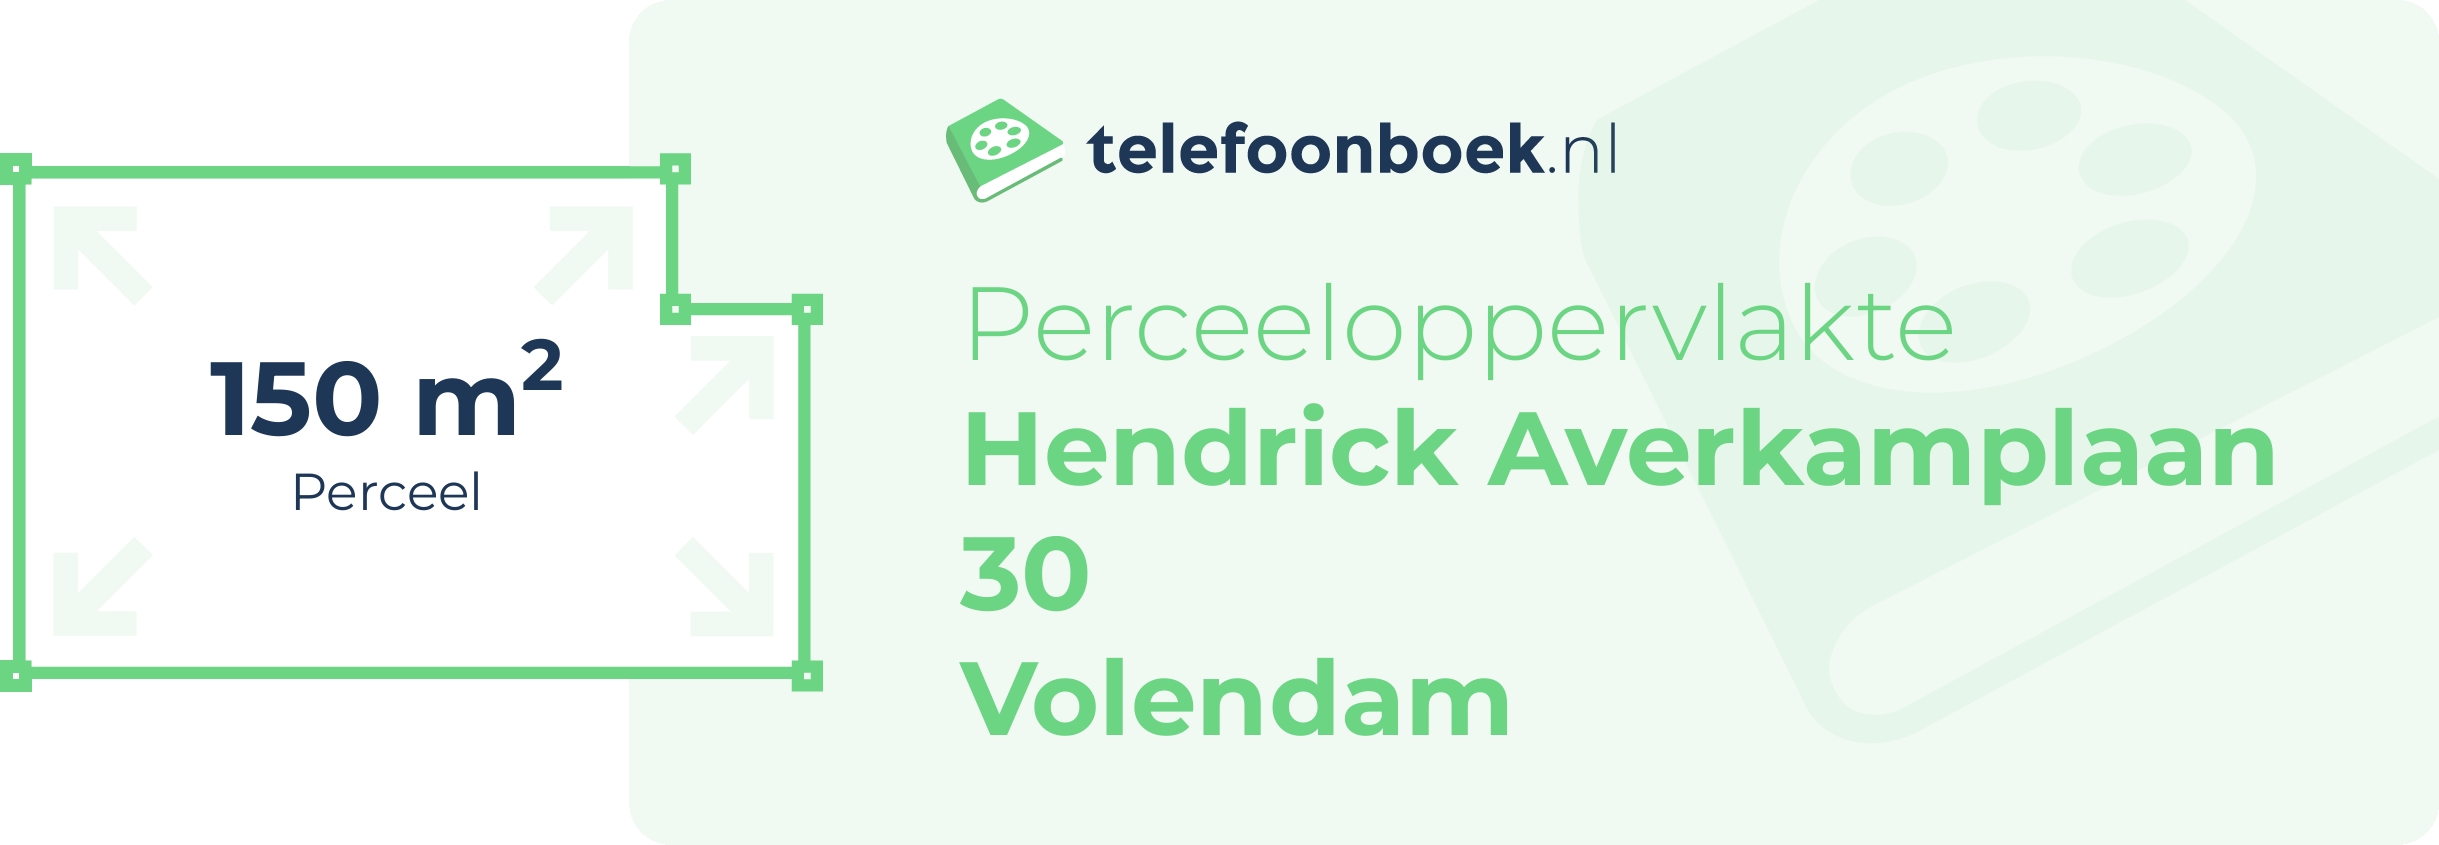 Perceeloppervlakte Hendrick Averkamplaan 30 Volendam